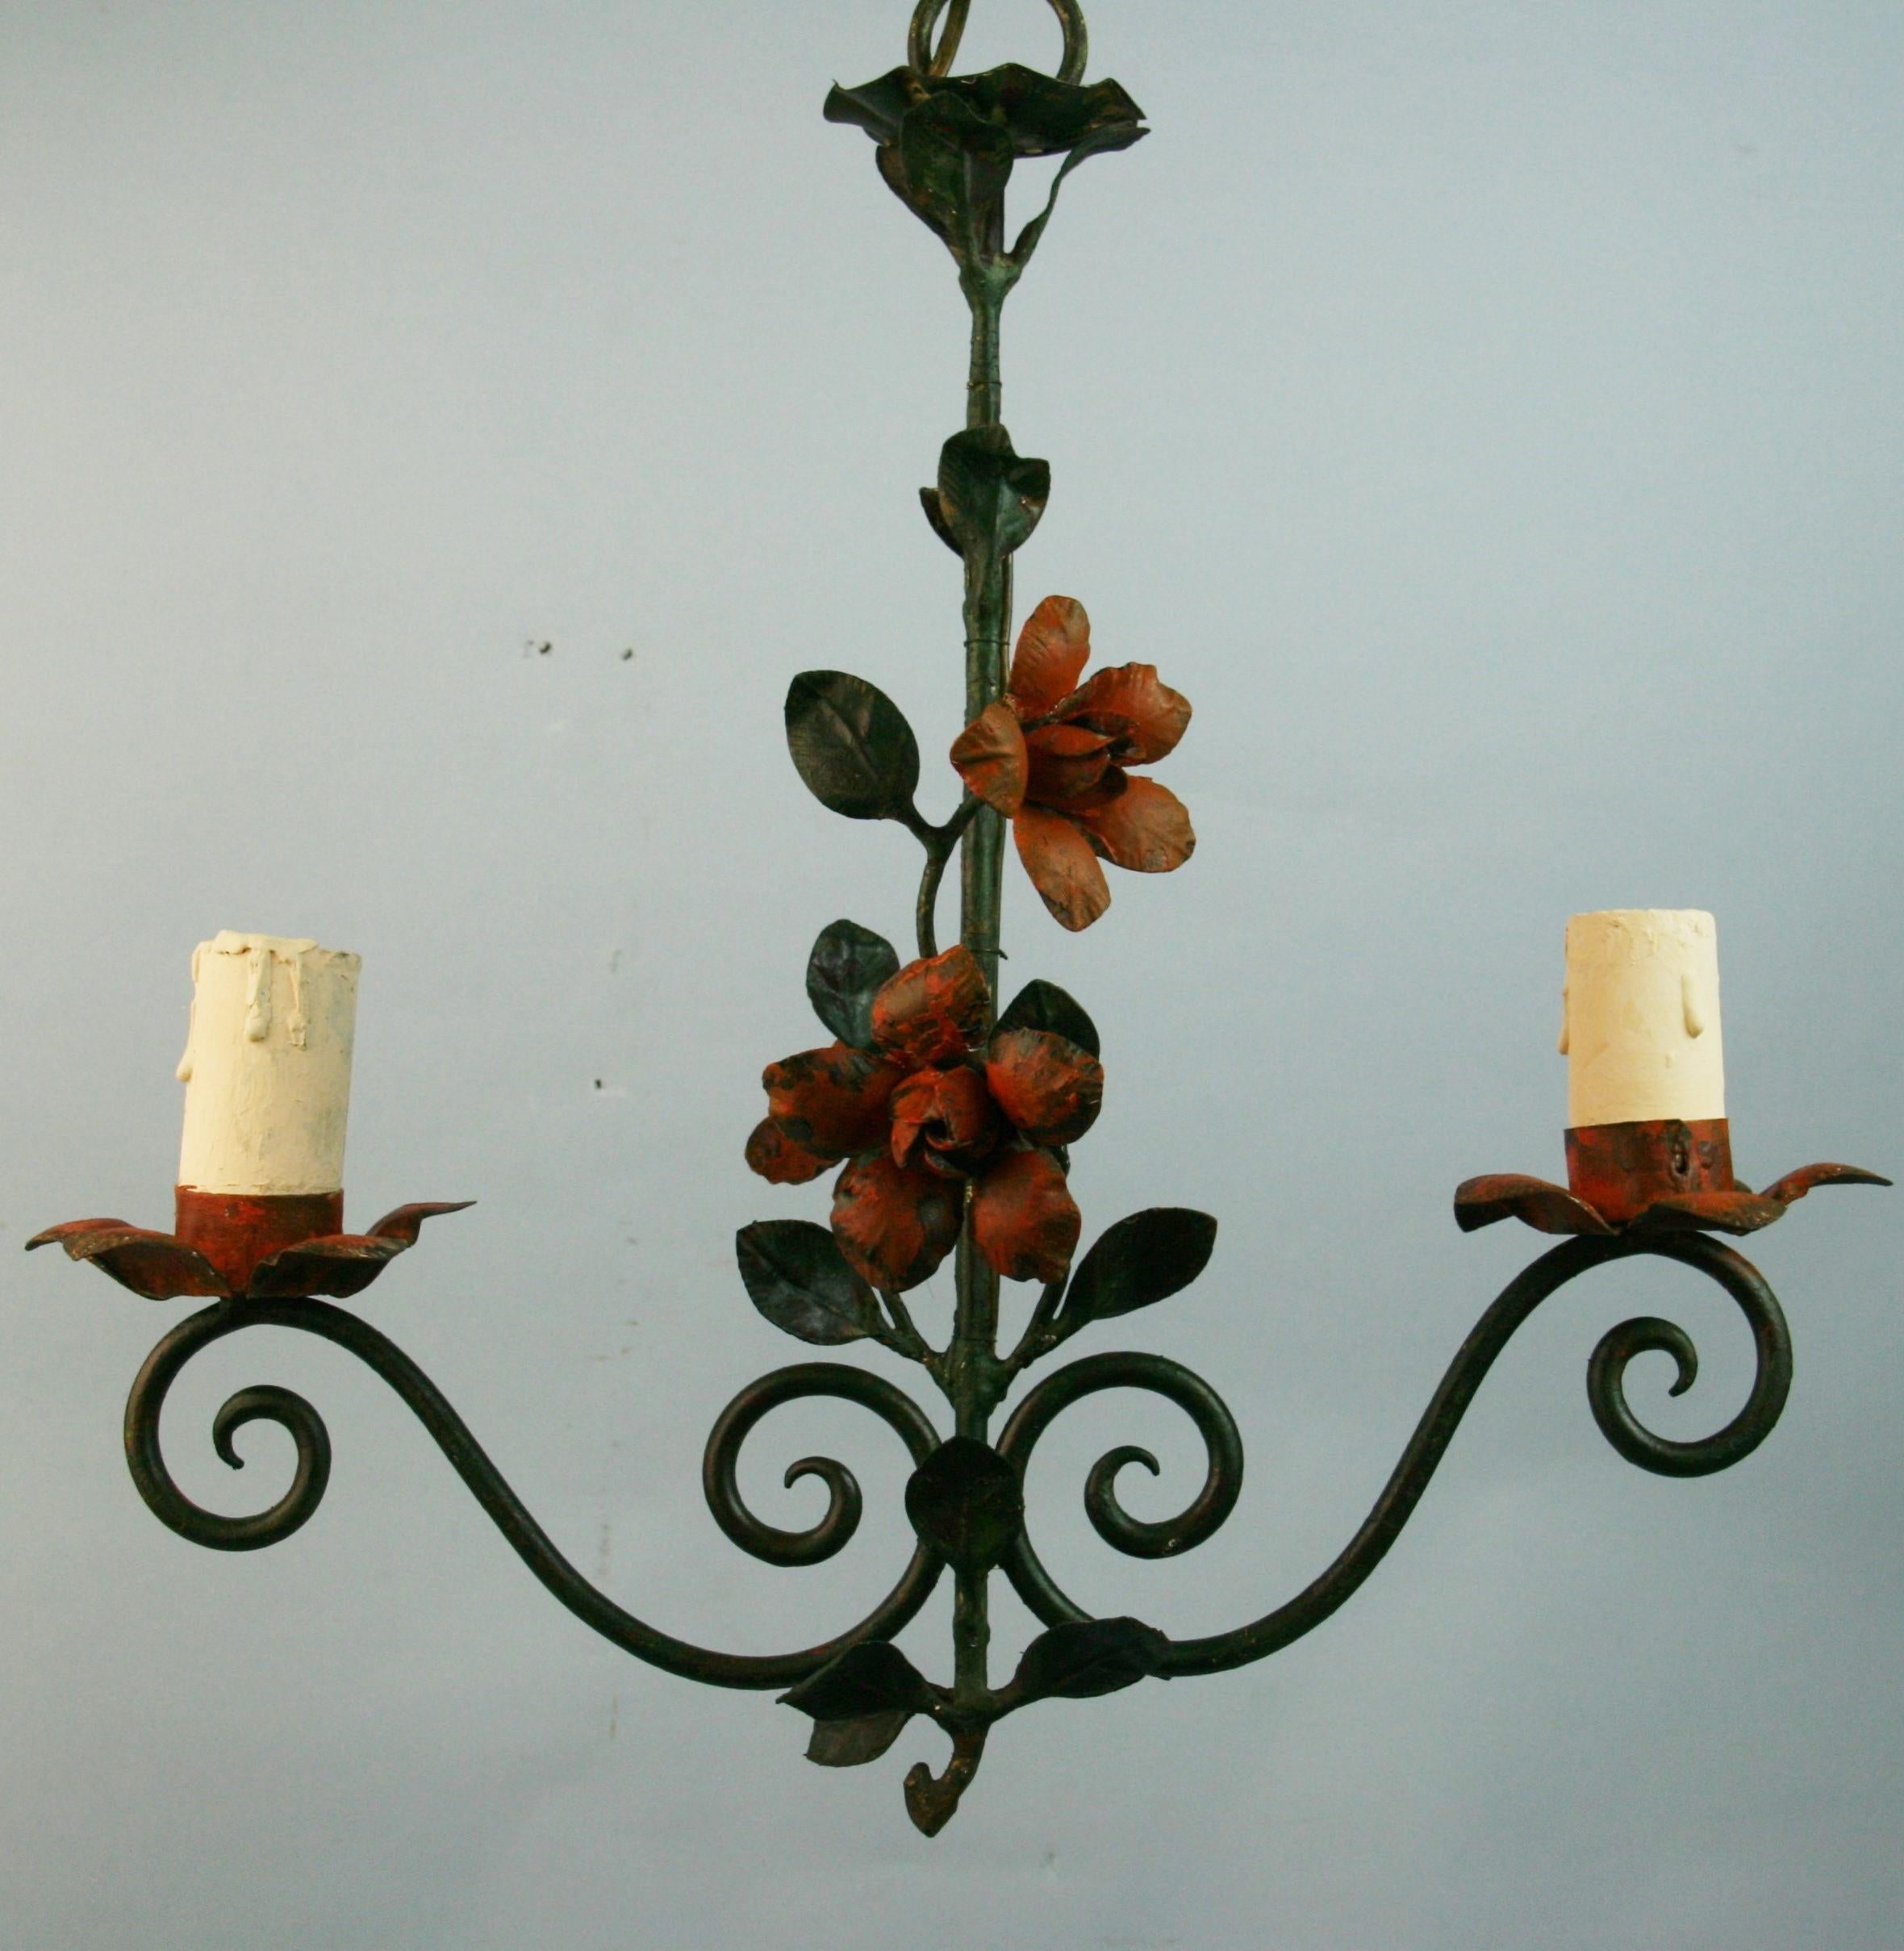 1268 French Tole flower and leaves 2 light chandelier
60 watt candelabra based bulbs.